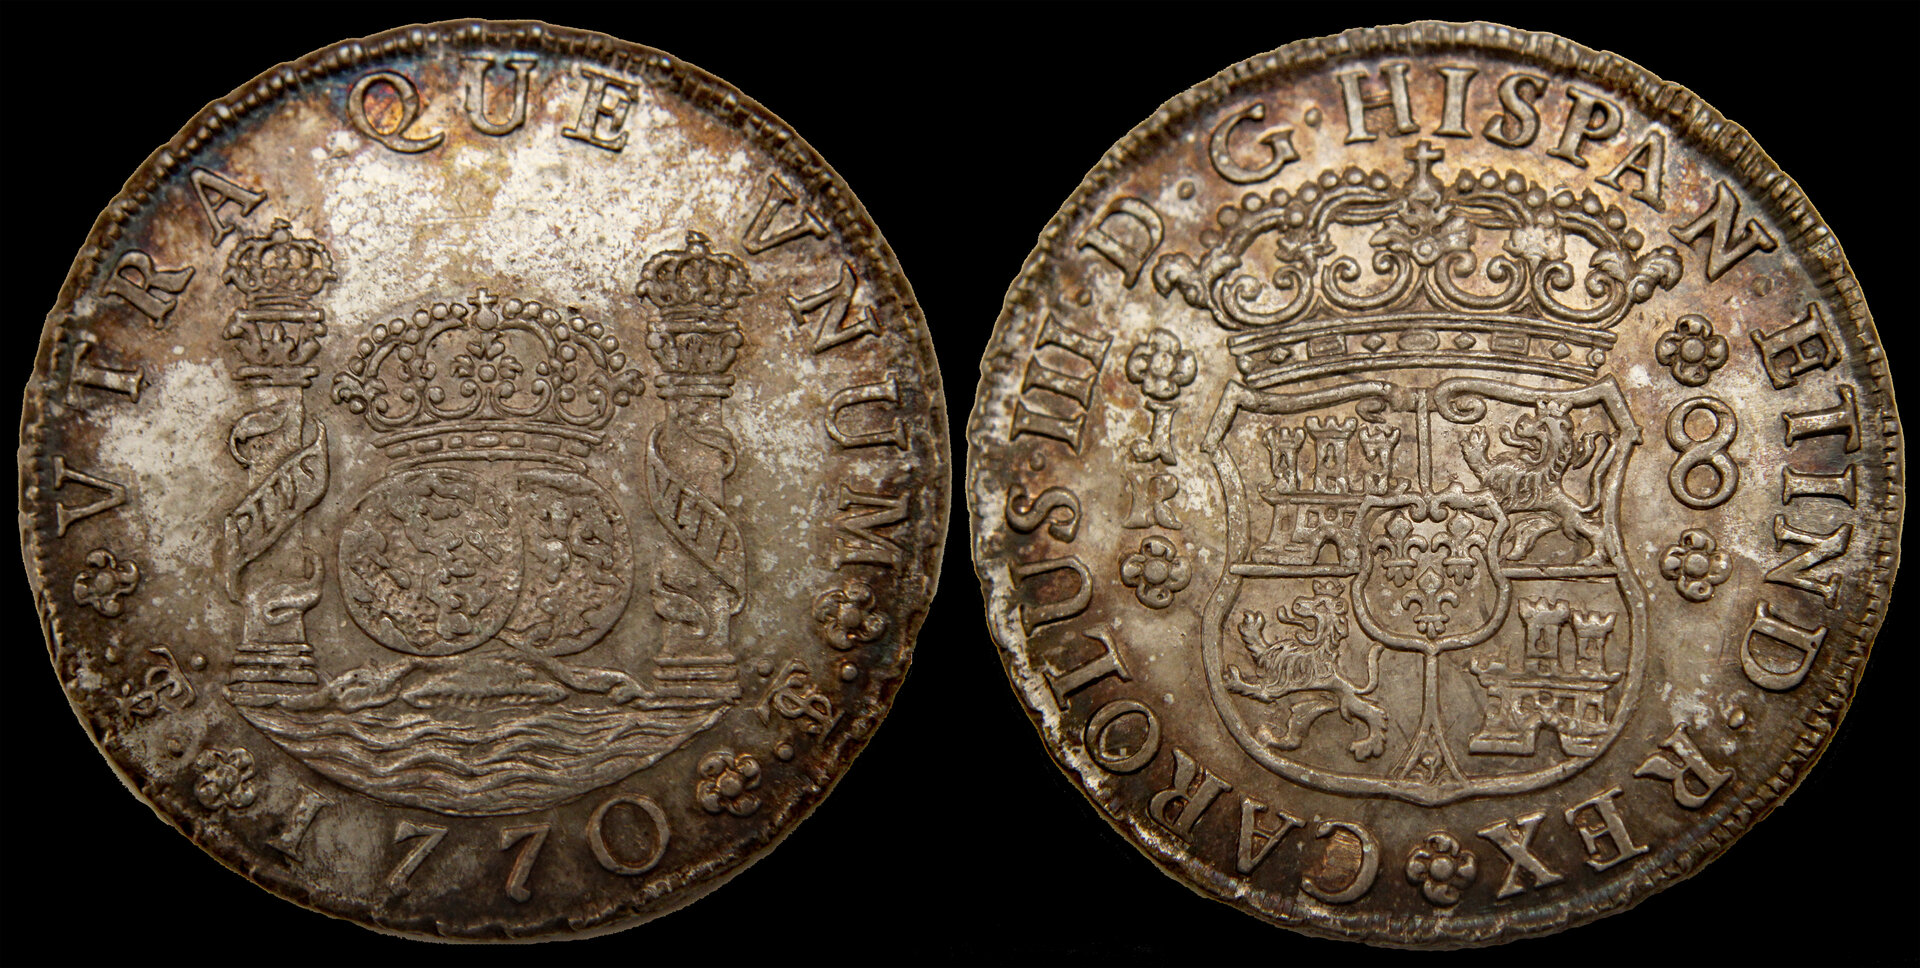 D-Camera Potosi 8 reales, Charles III, 1770 JR,  AU KM50 27.3g   2-23-21.jpg